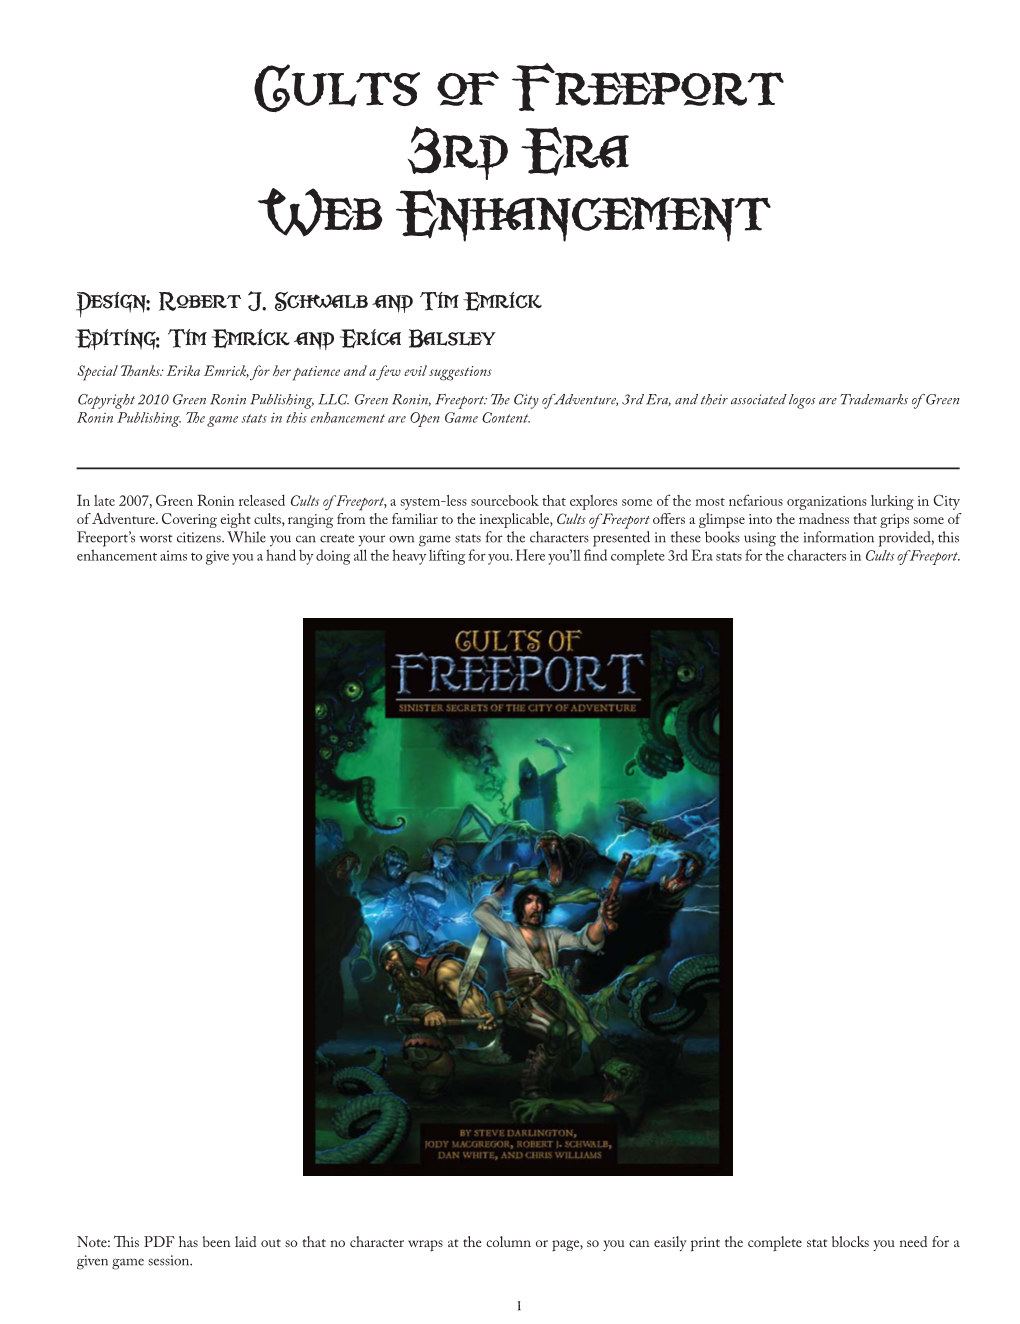 Cults of Freeport 3Rd Era Web Enhancement